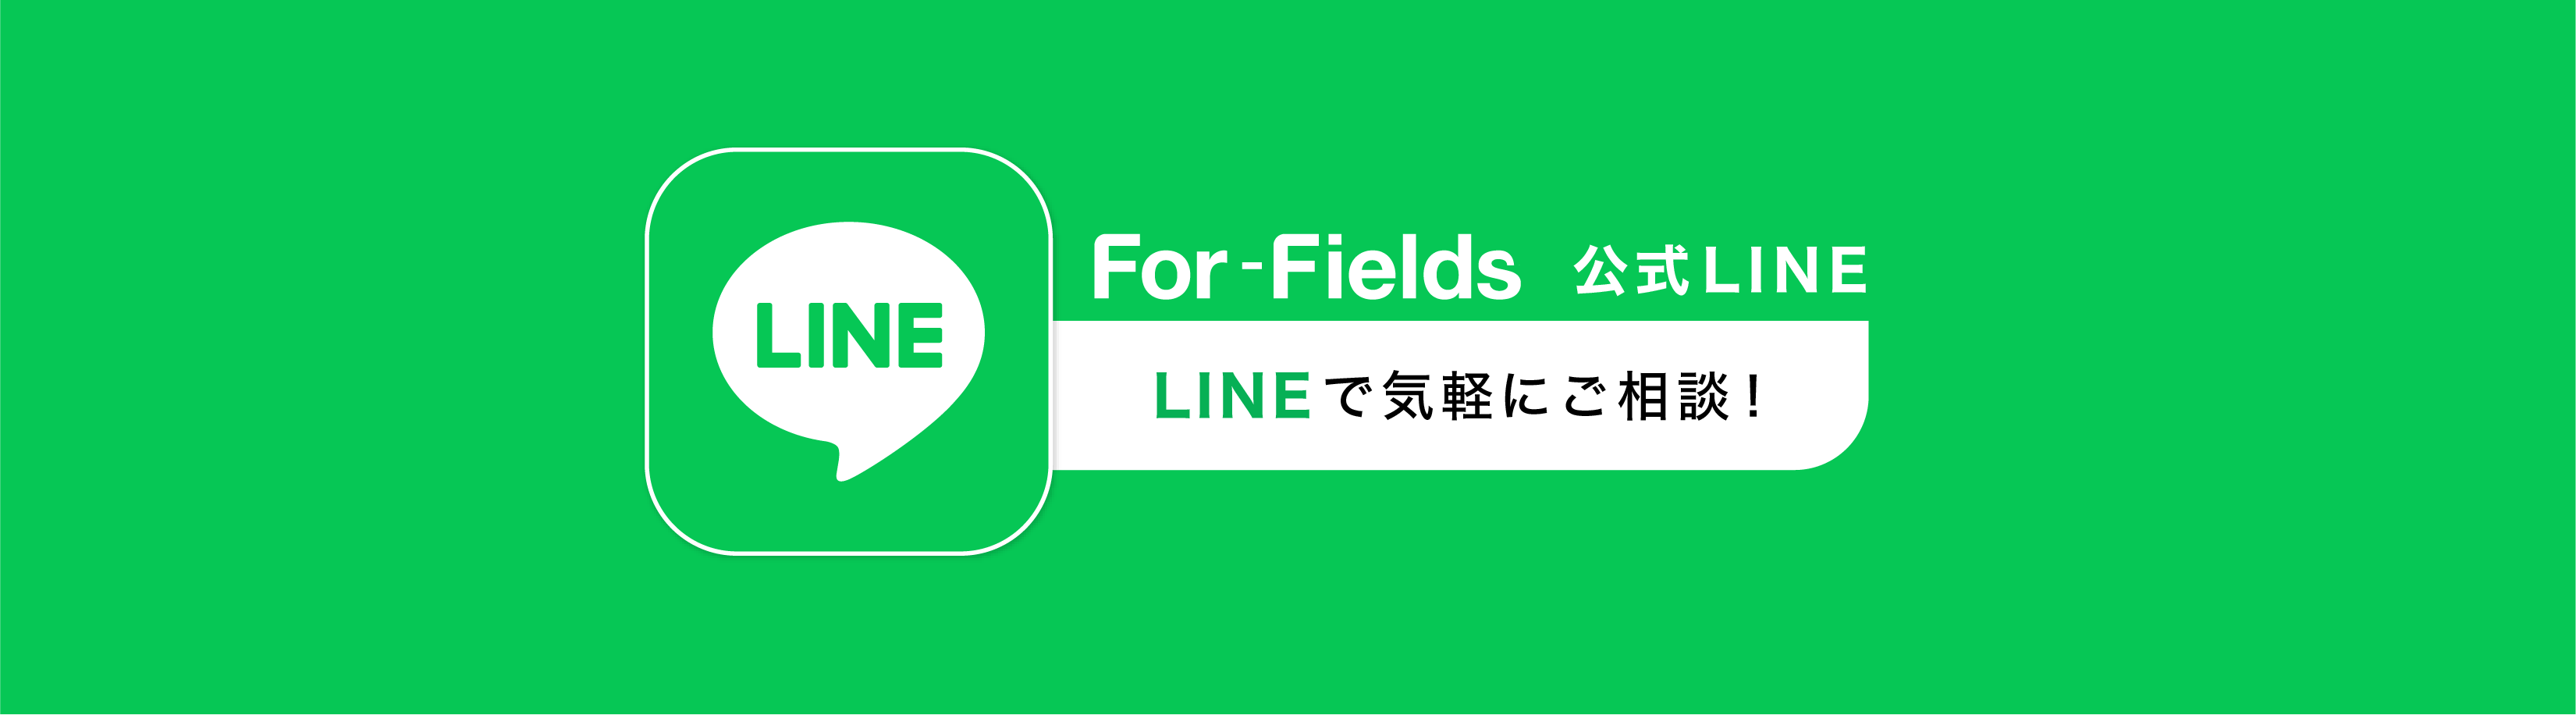 For-Fields公式LINE ラインで気軽にご相談！